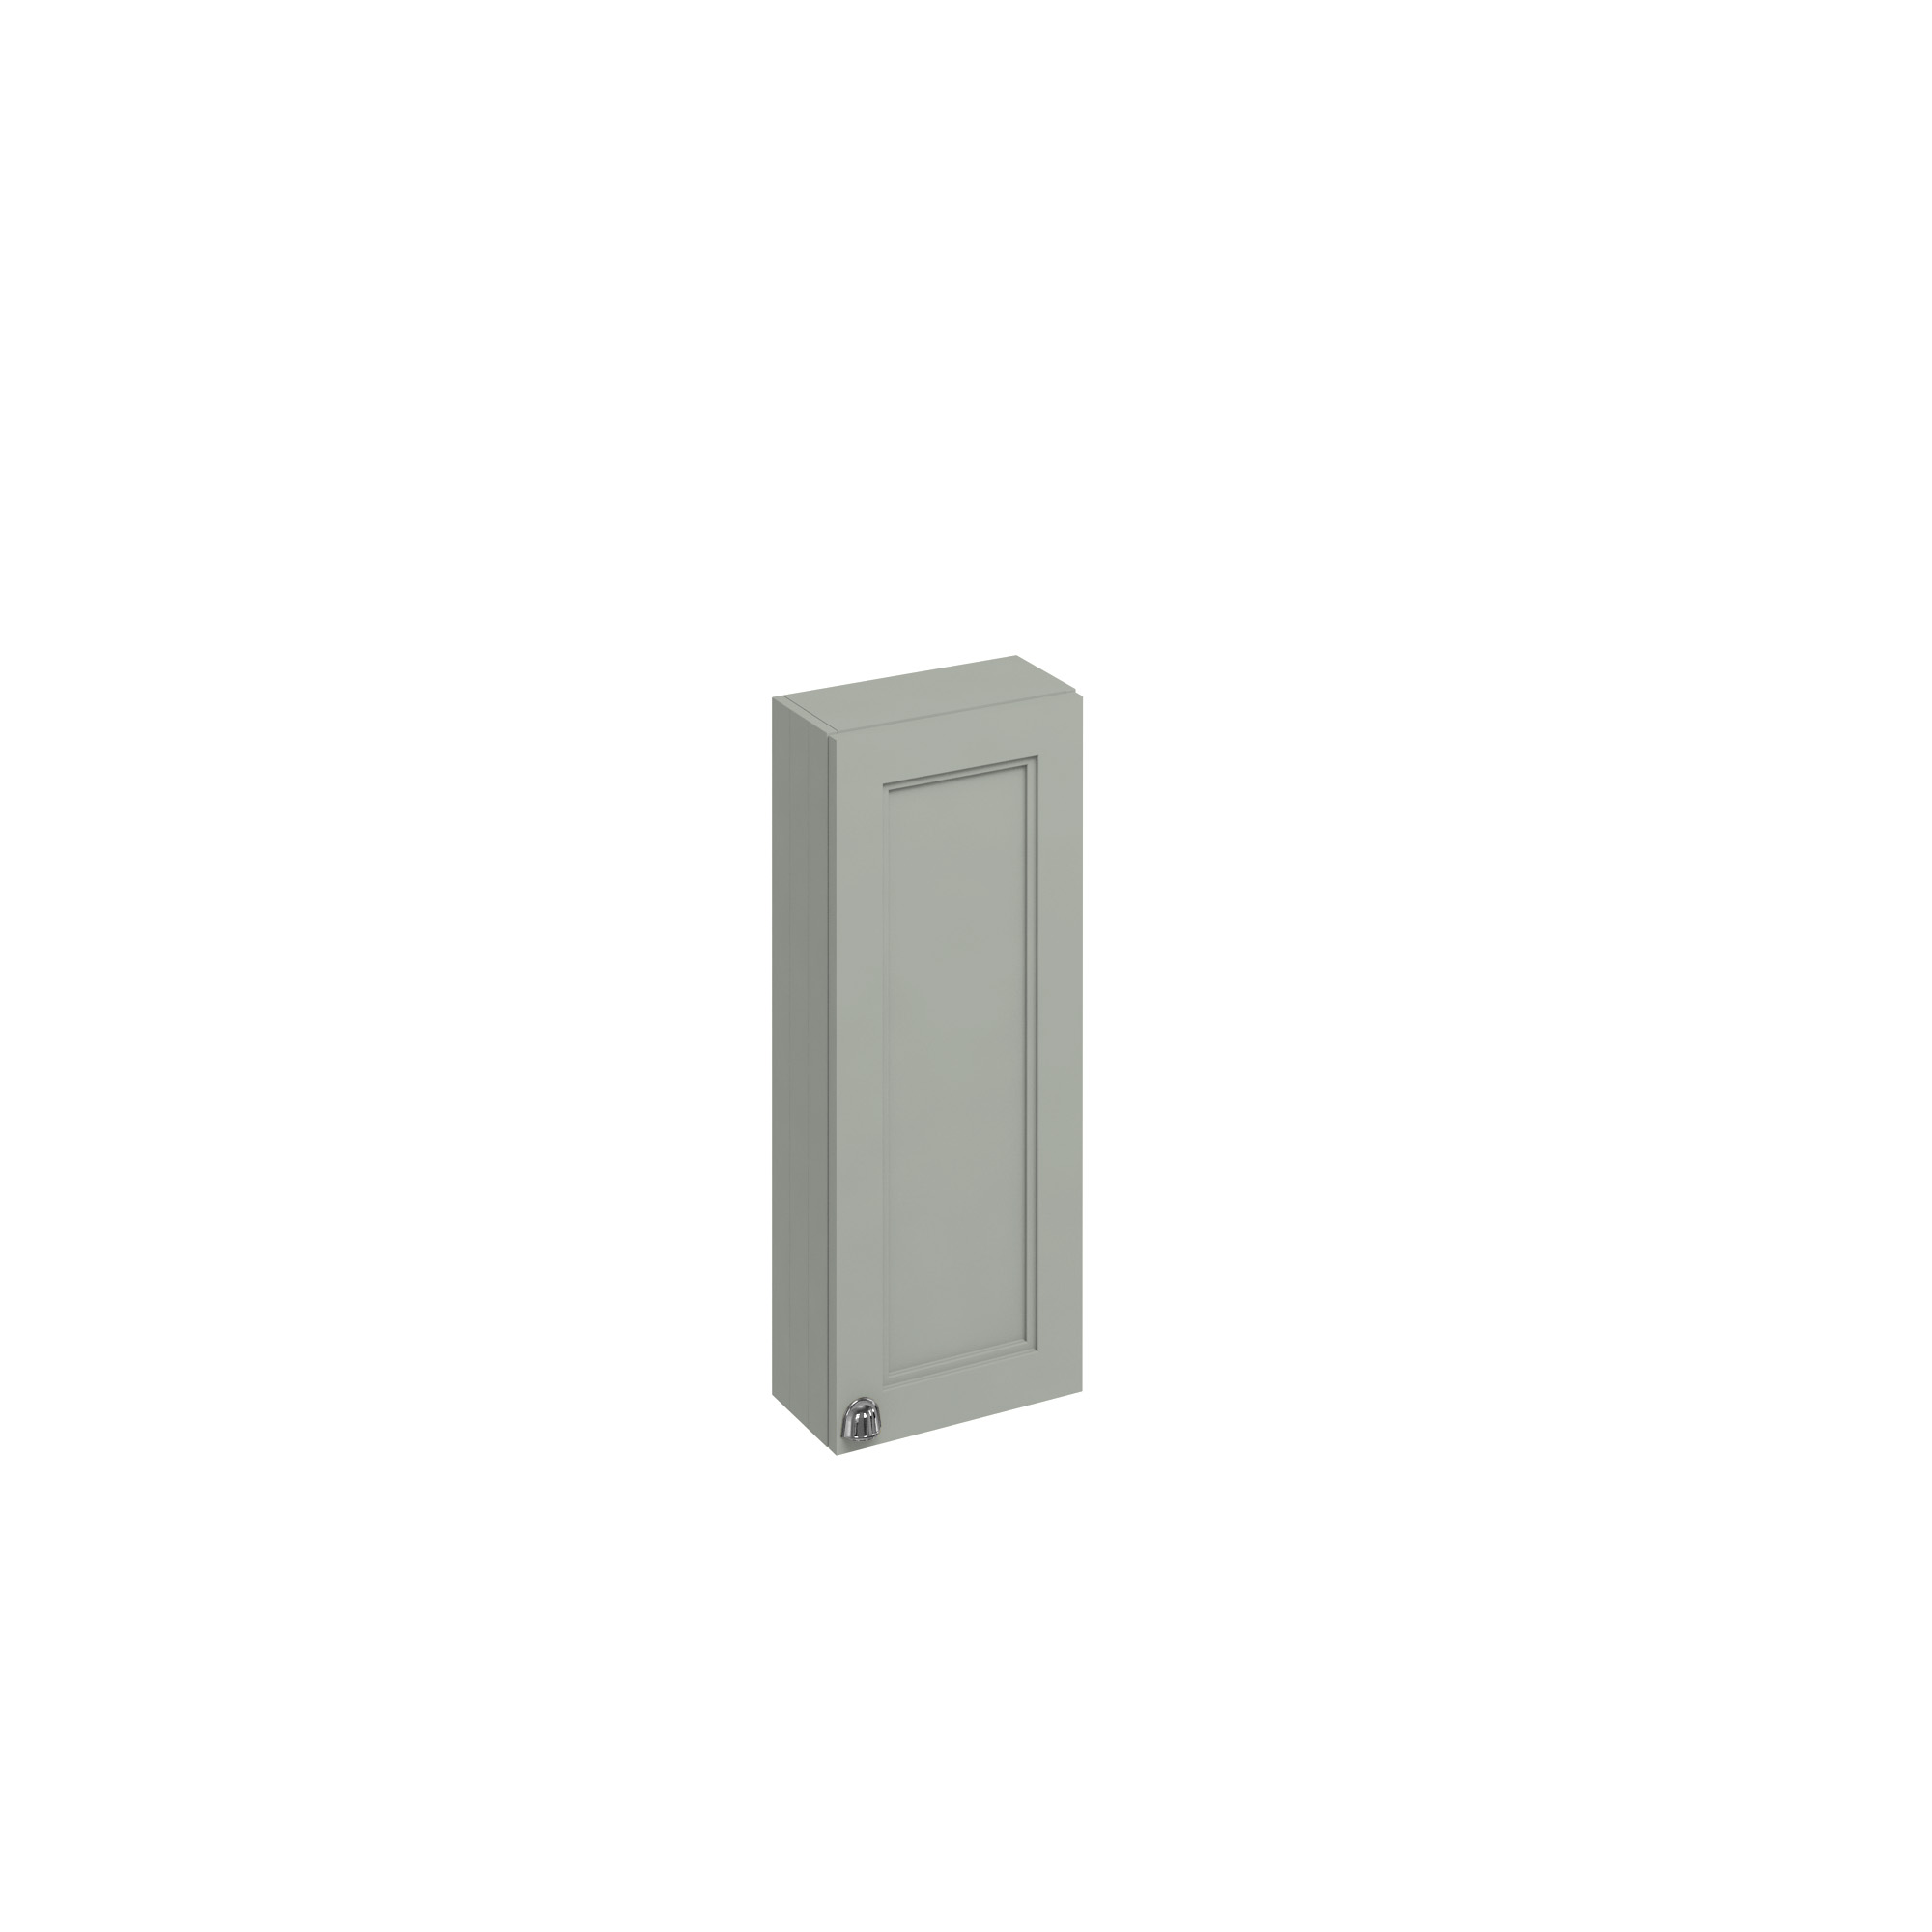 30cm single door wall unit